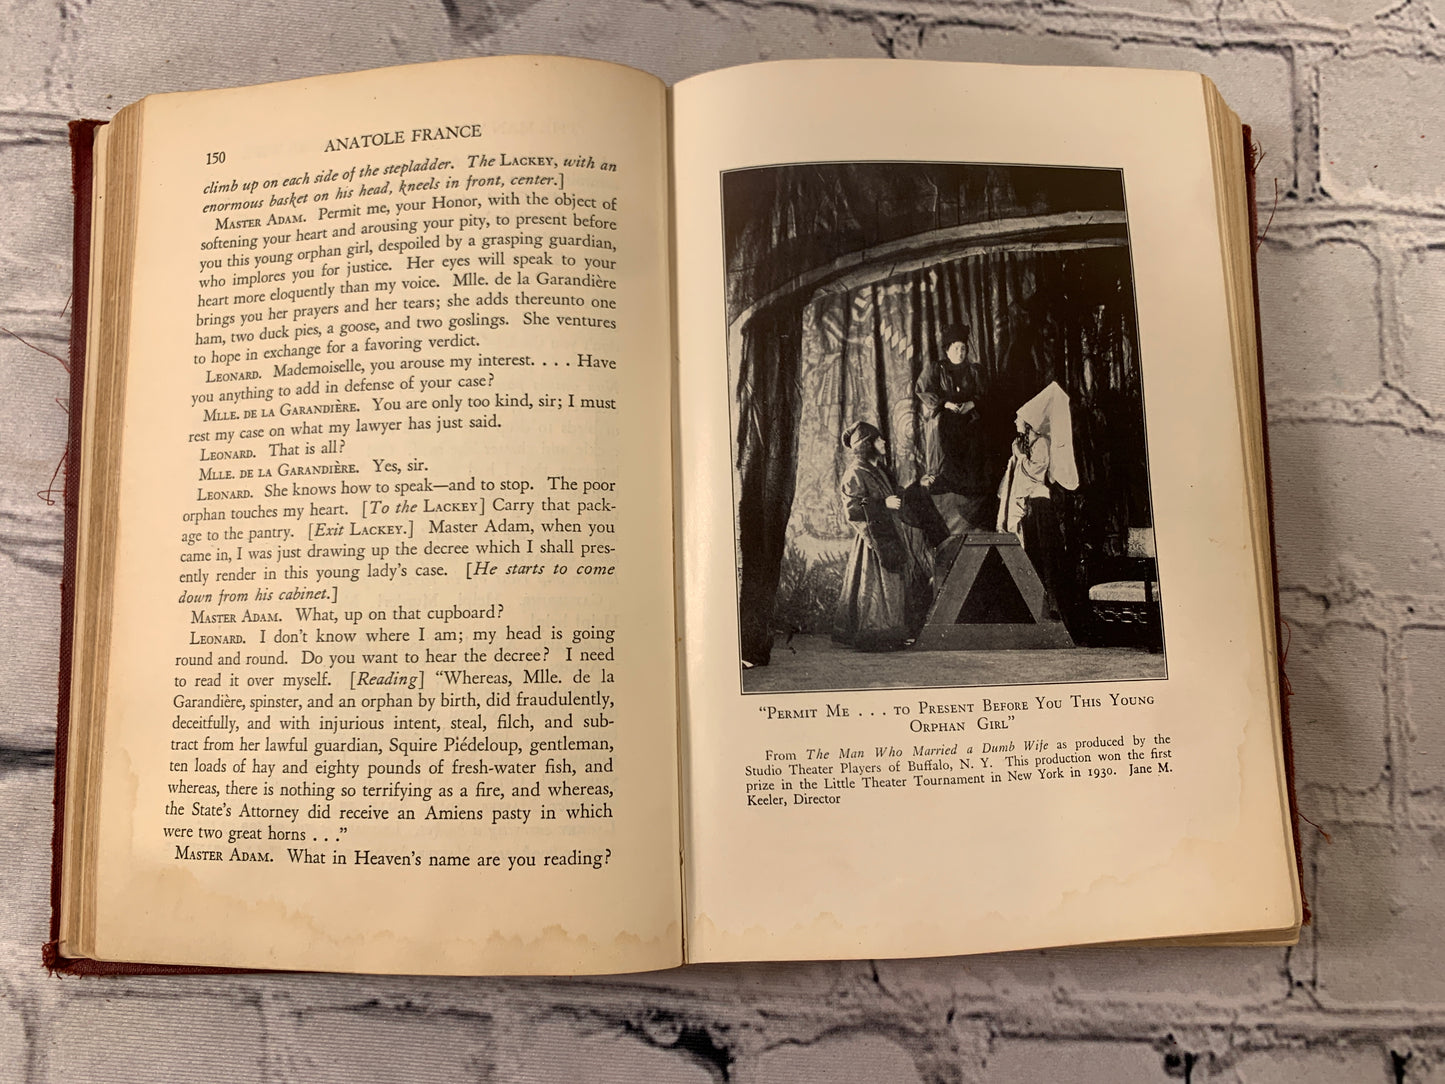 Short Plays edited by Edwin Van B. Knickerbocker [1931]